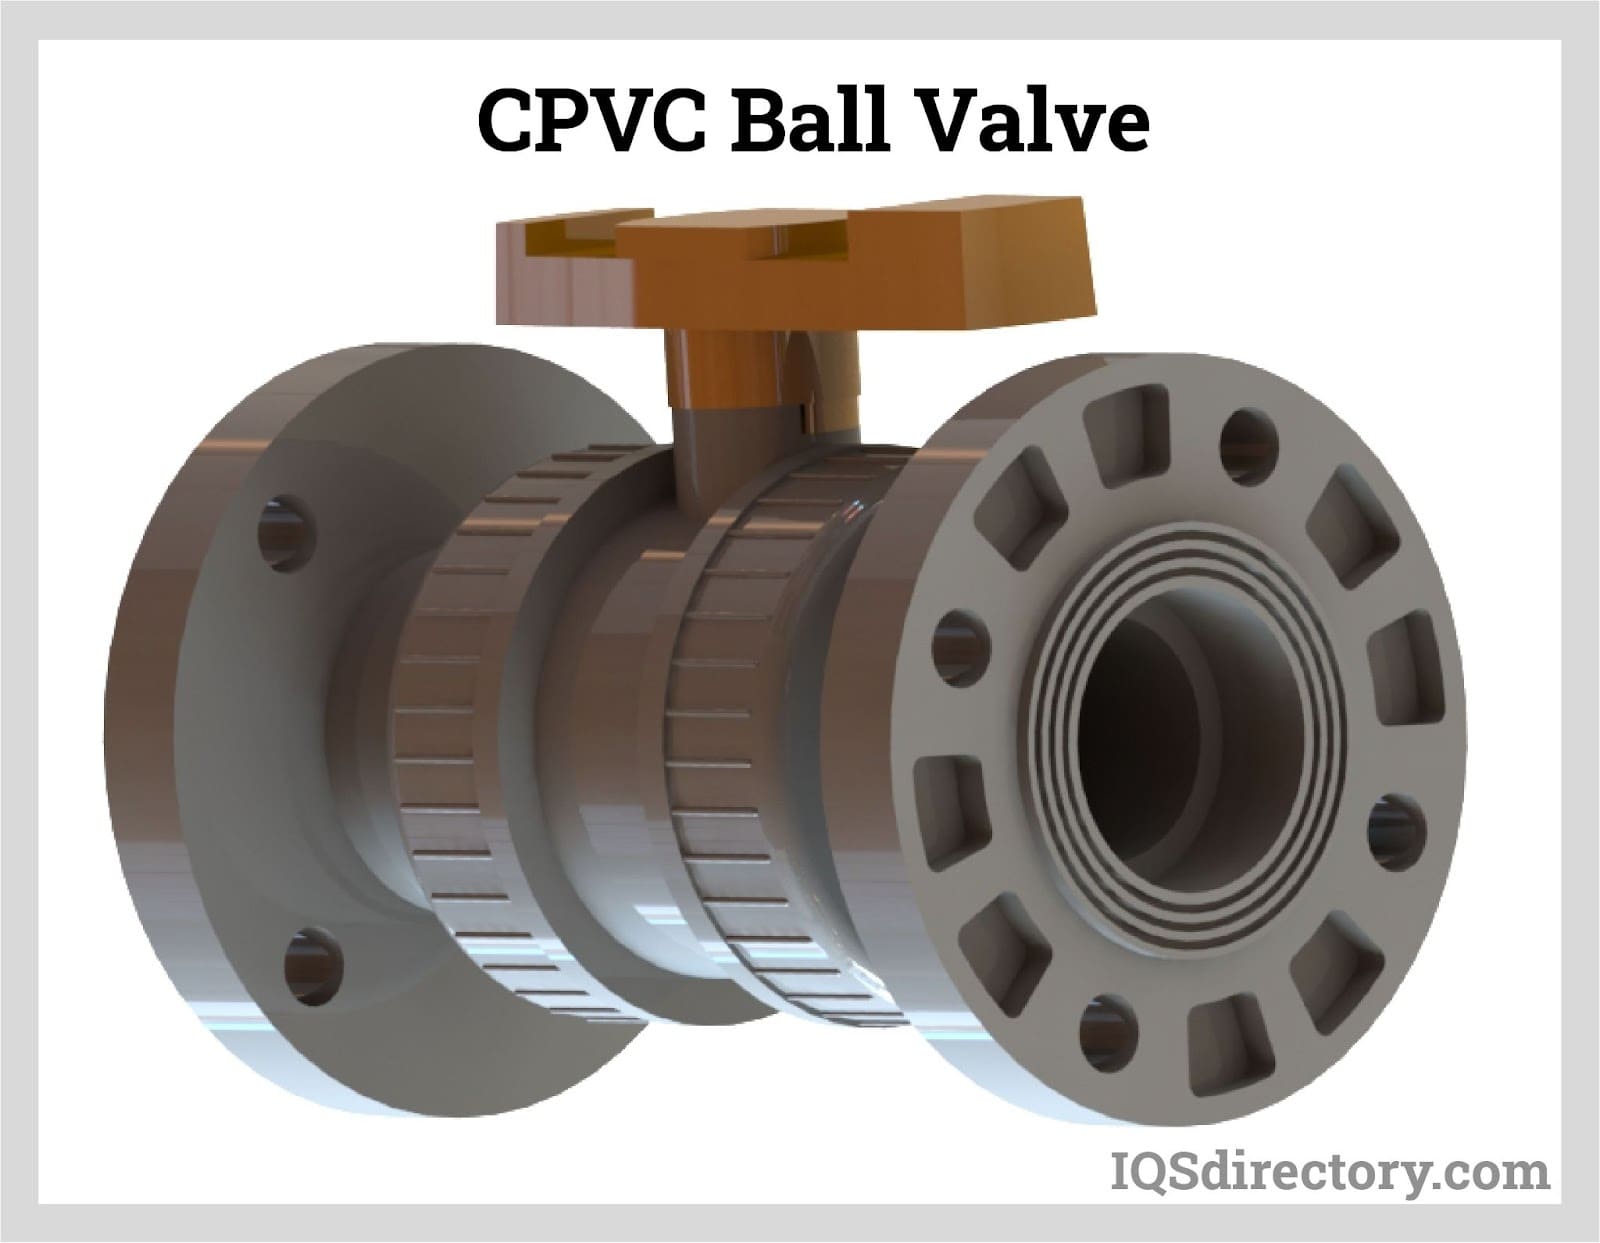 CPVC Ball Valve